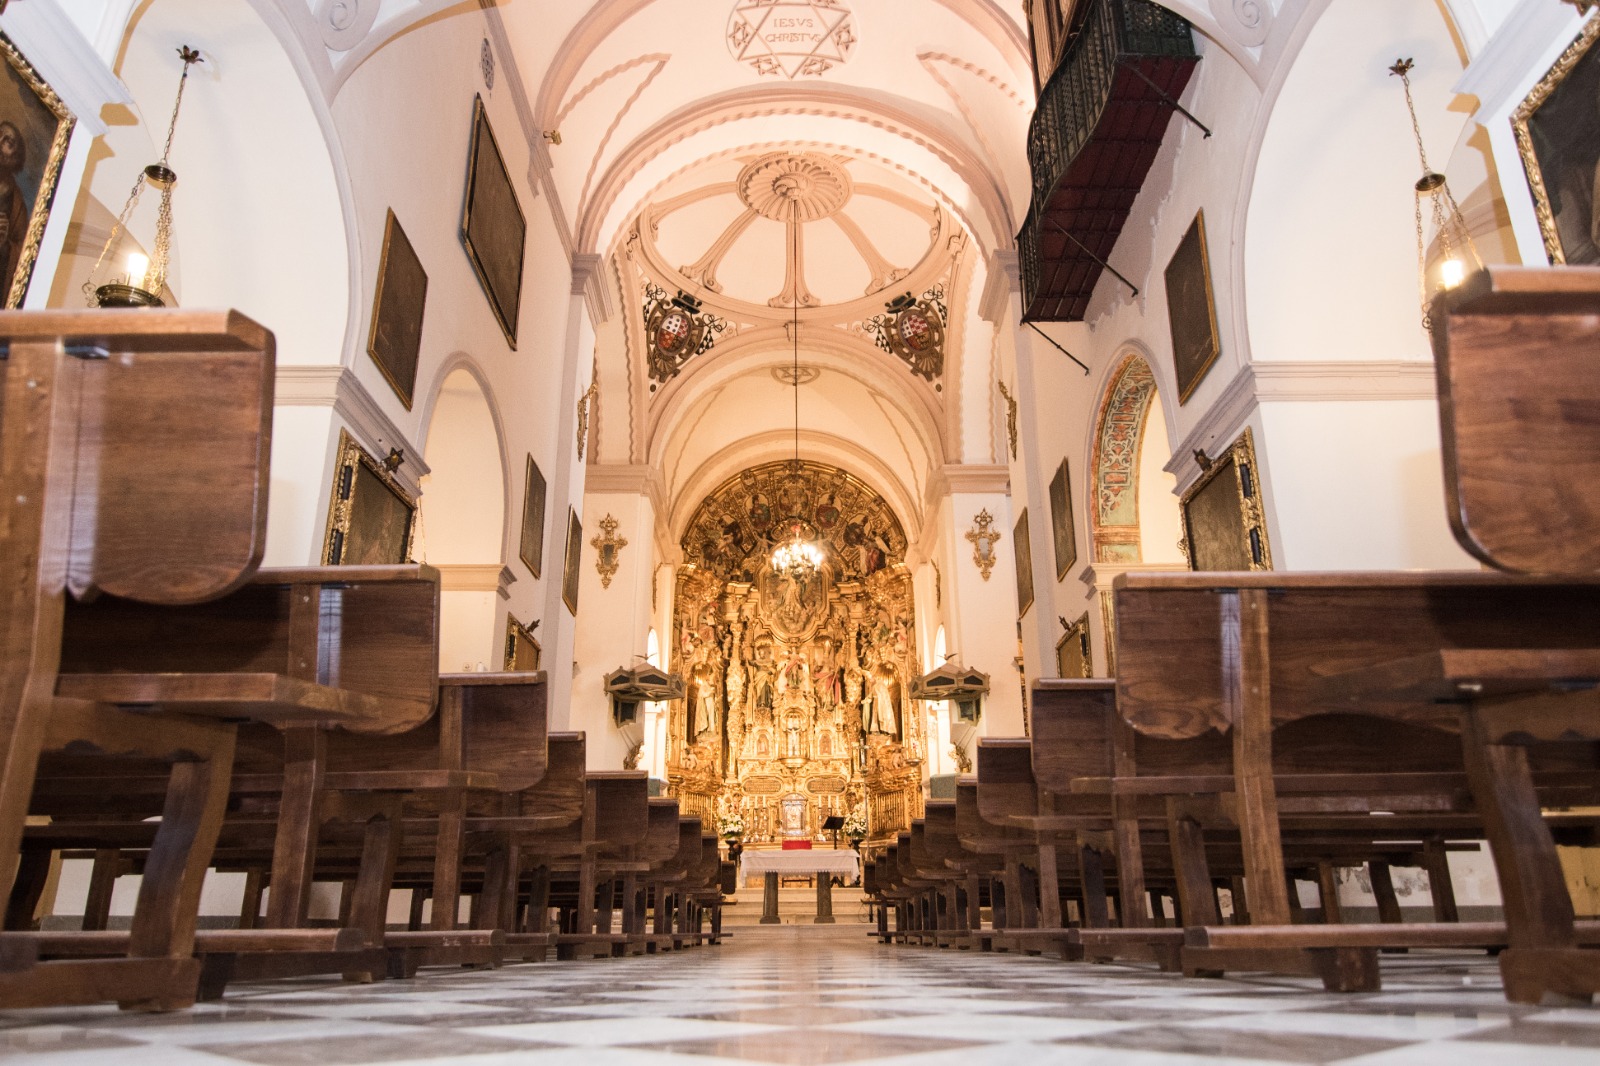 Abadía del Sacromonte - Official Andalusia tourism website